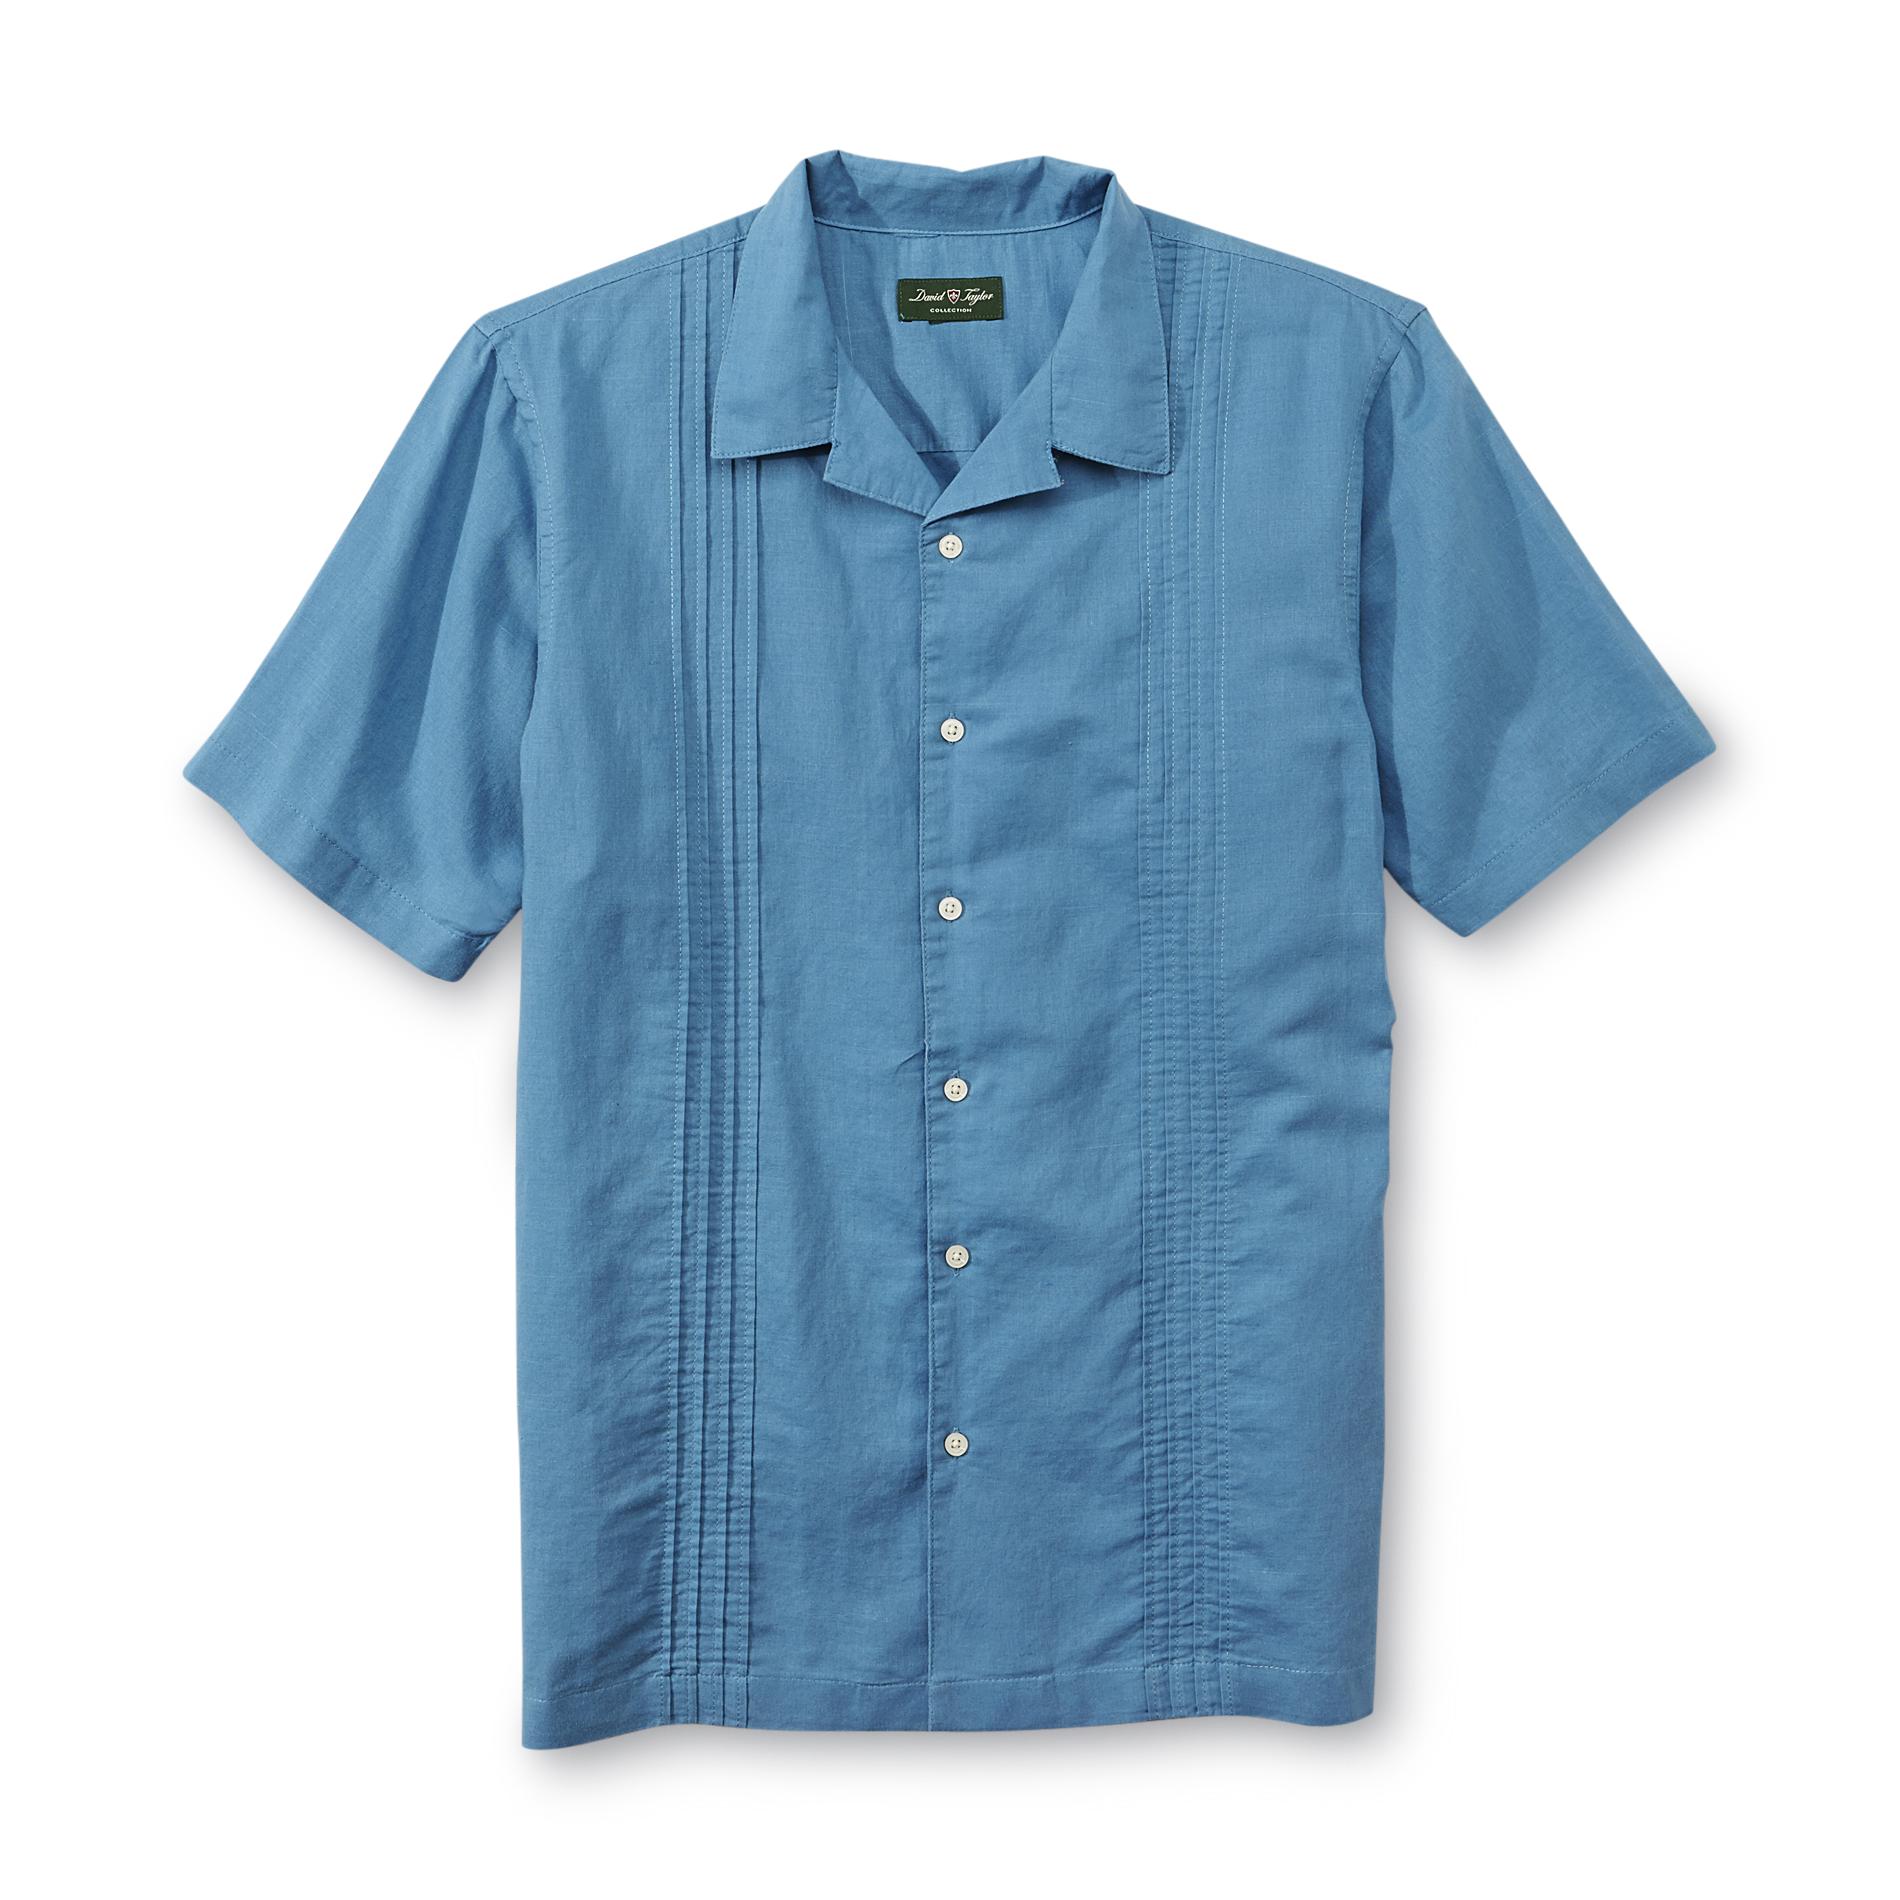 David Taylor Collection Men's Short-Sleeve Camp Shirt